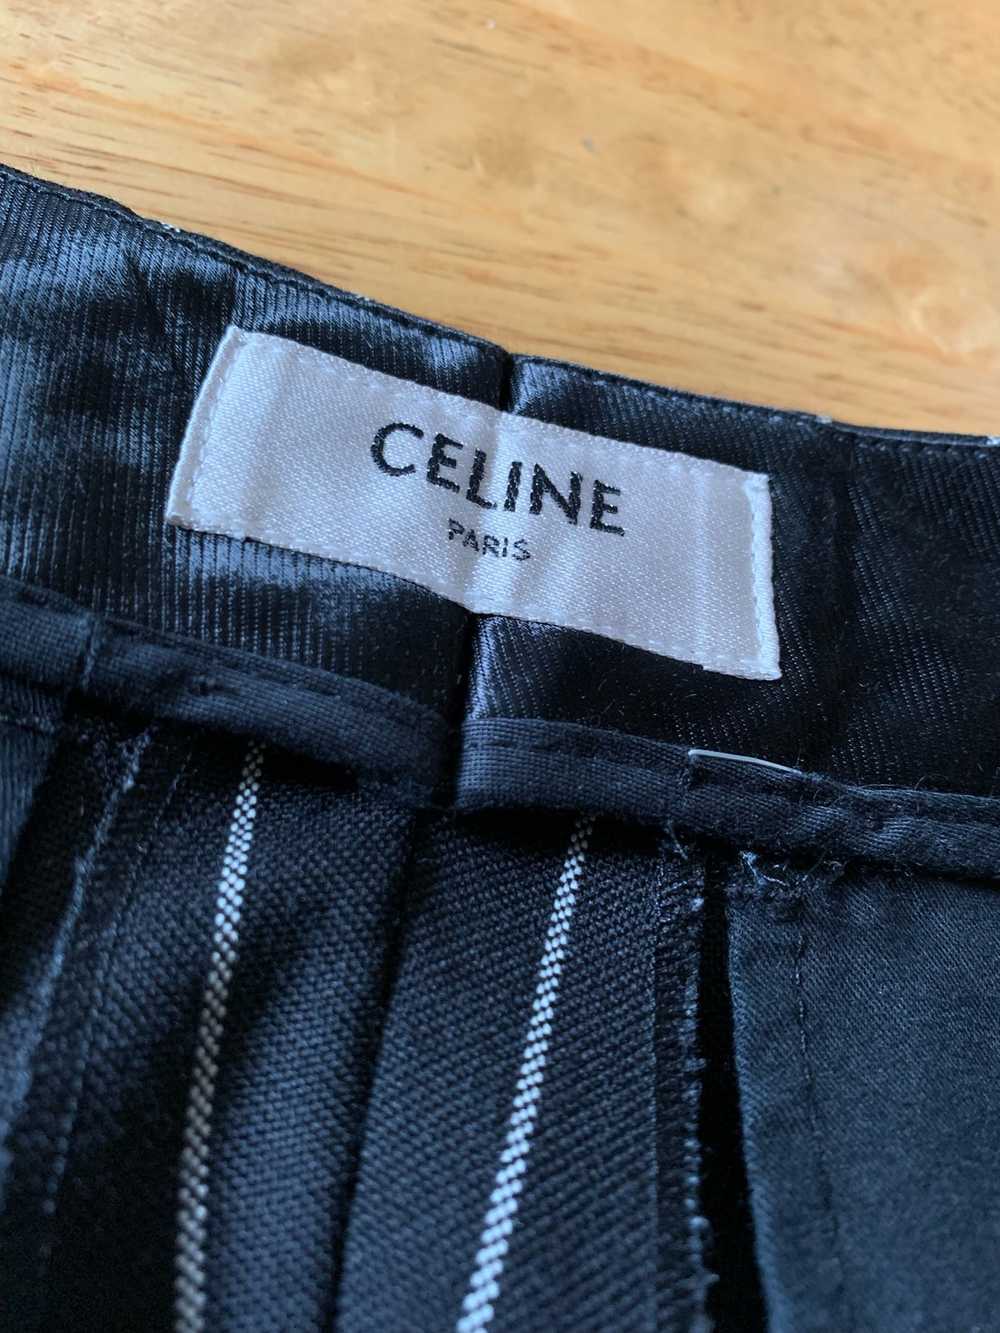 Celine Pinstripe Suit - image 5